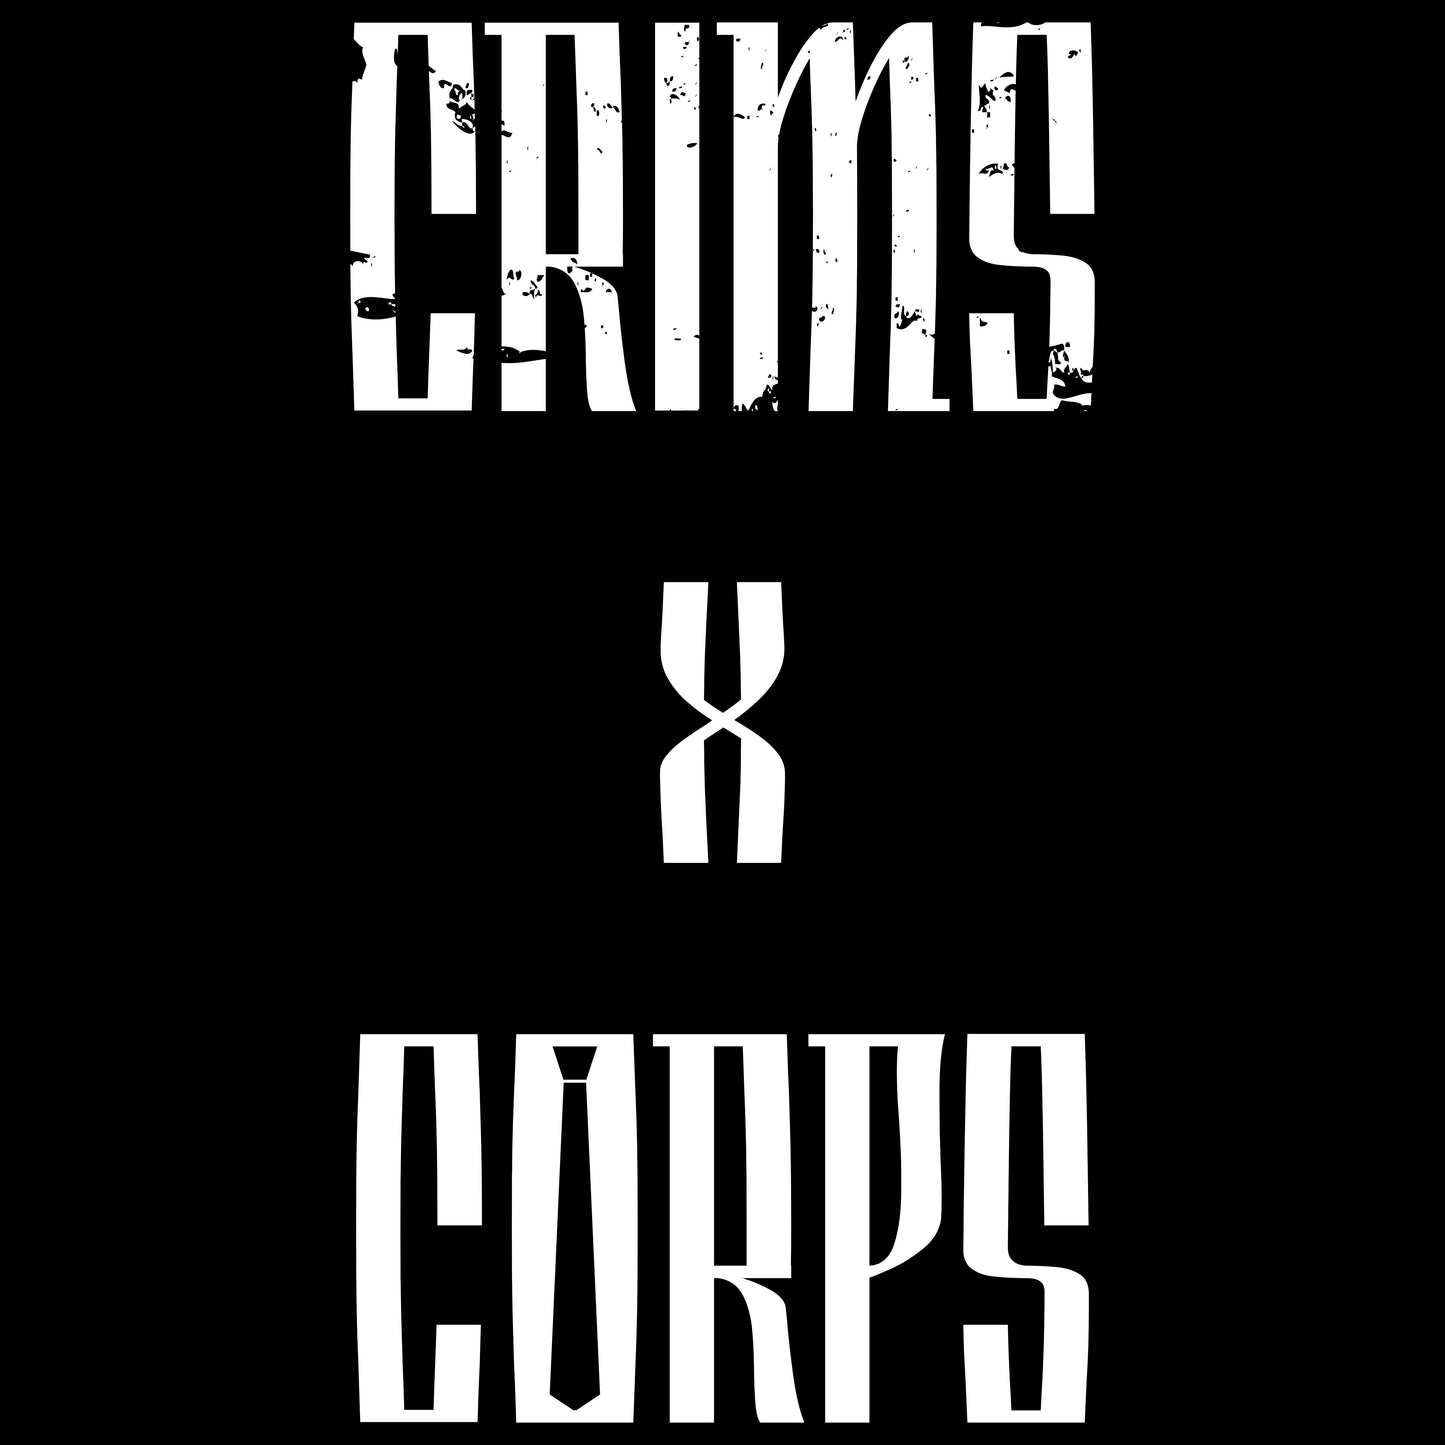 crims x corps [hoodie] - ovrsze